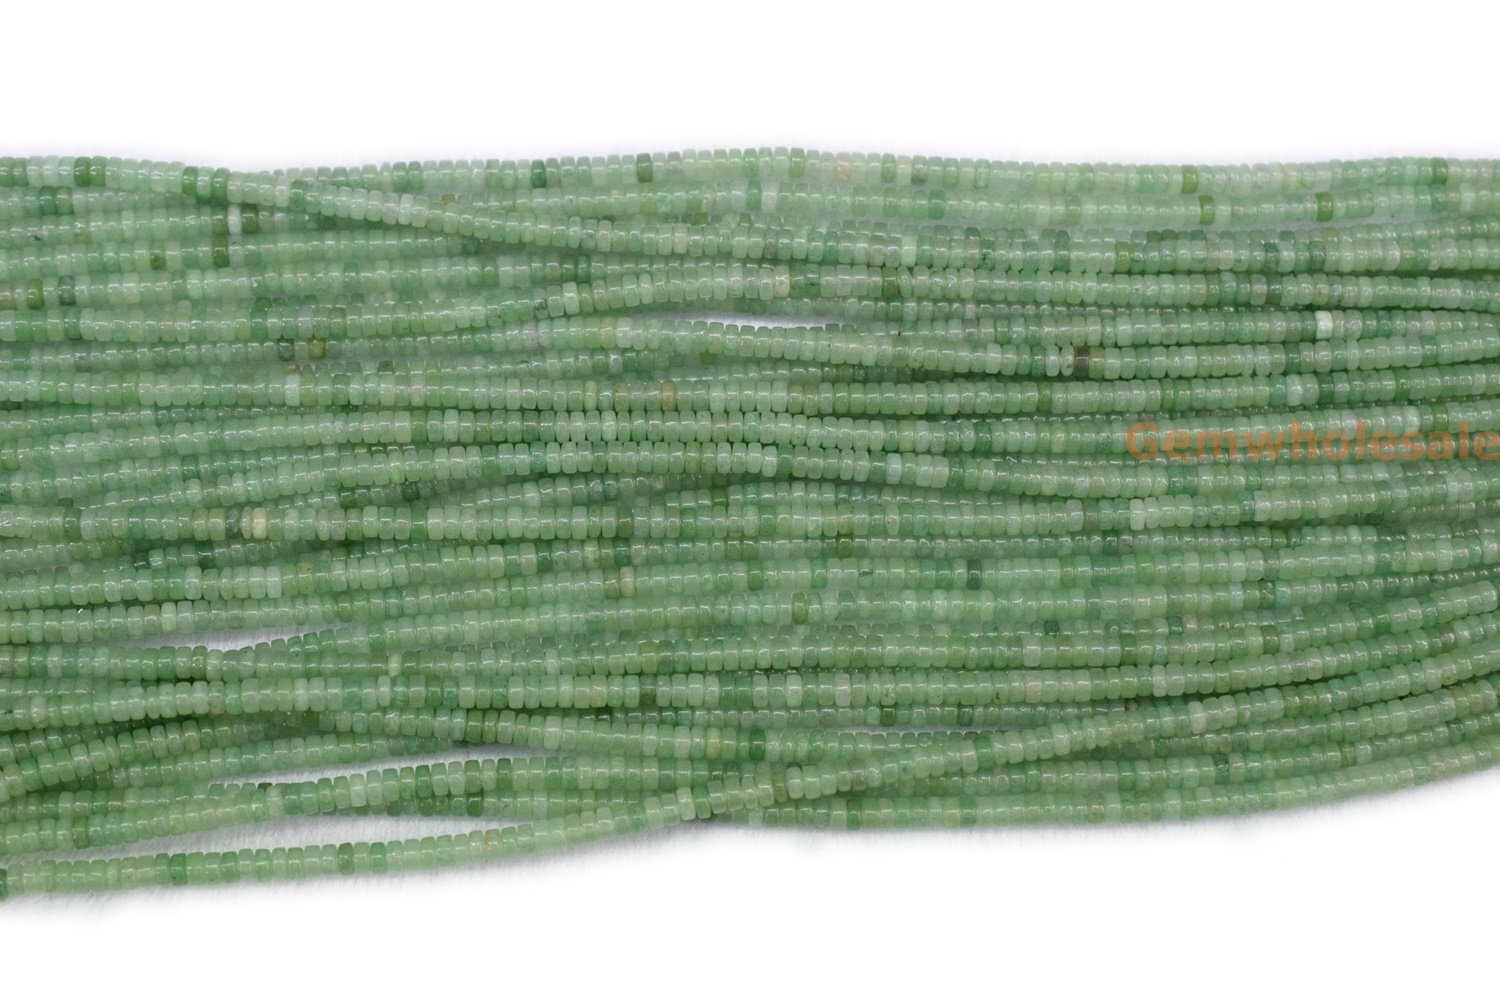 Green Aventurine - Heishi- beads supplier